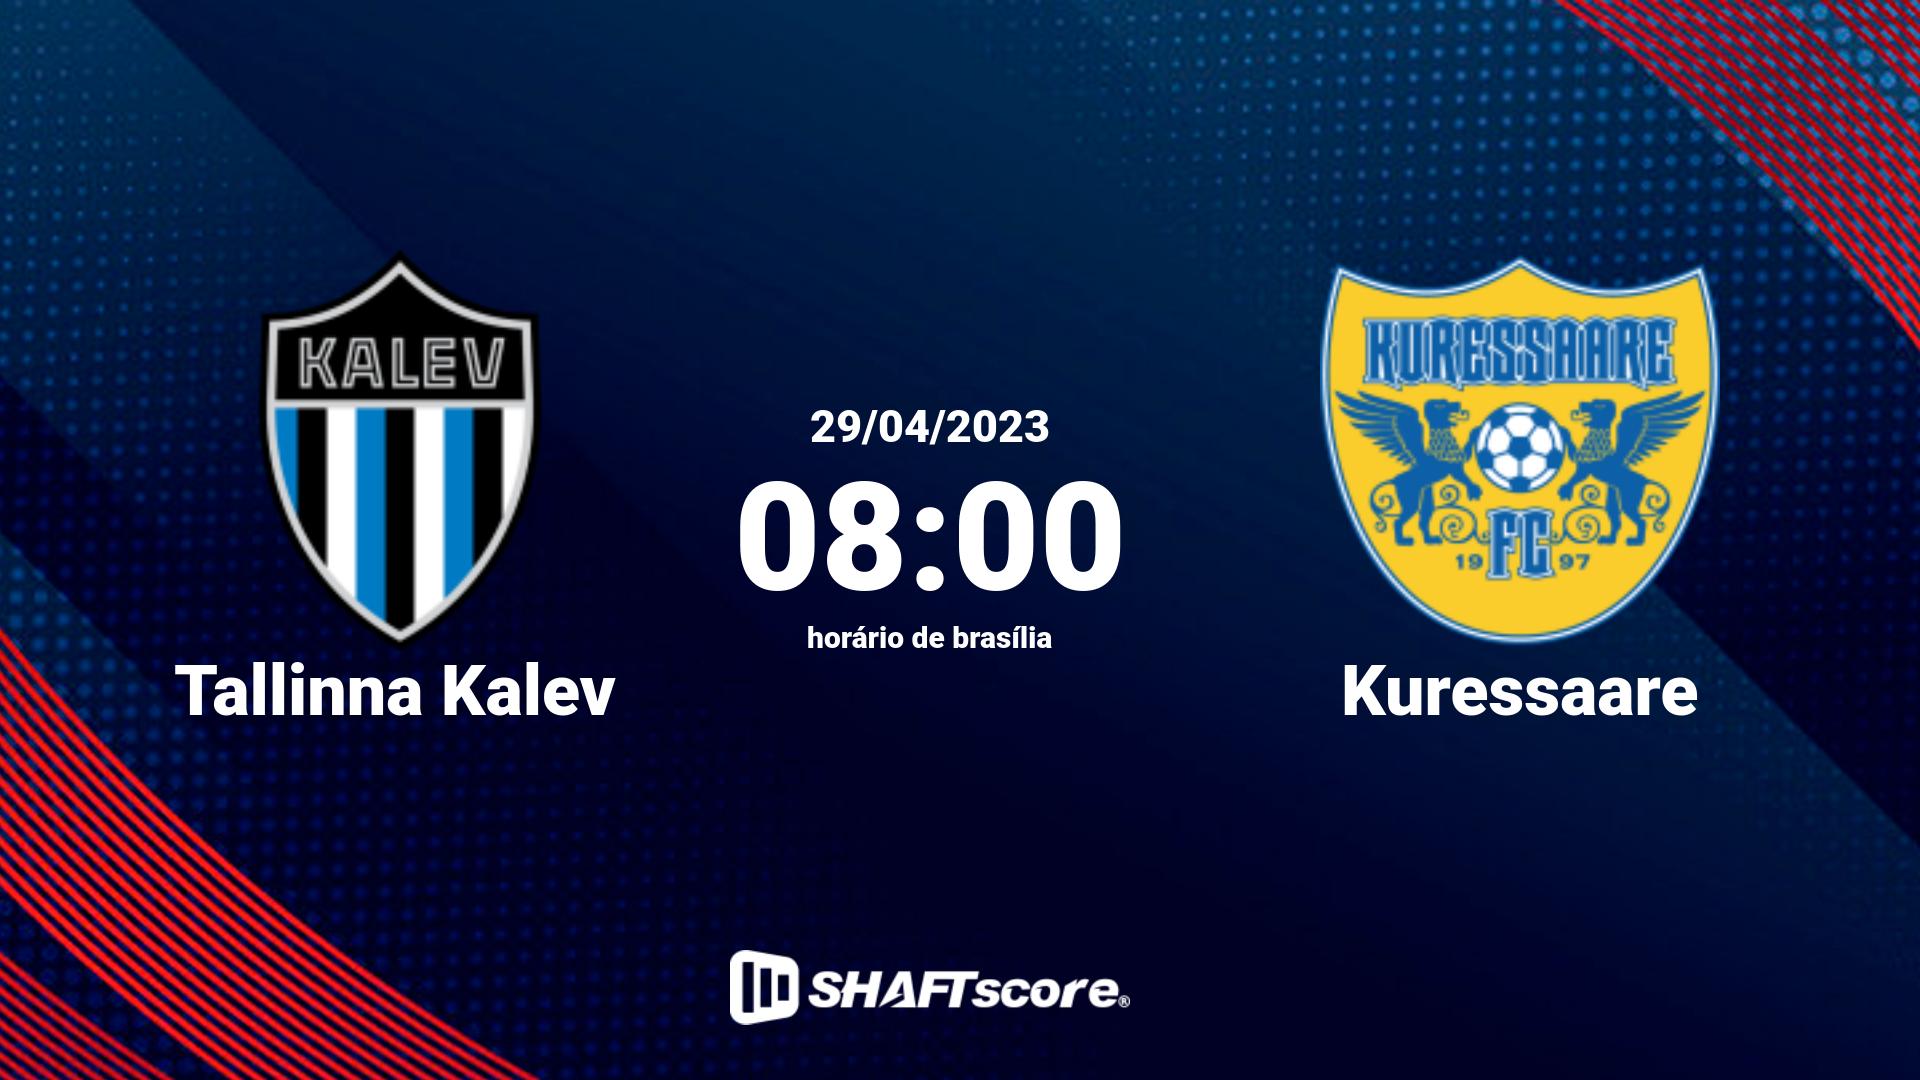 Estatísticas do jogo Tallinna Kalev vs Kuressaare 29.04 08:00